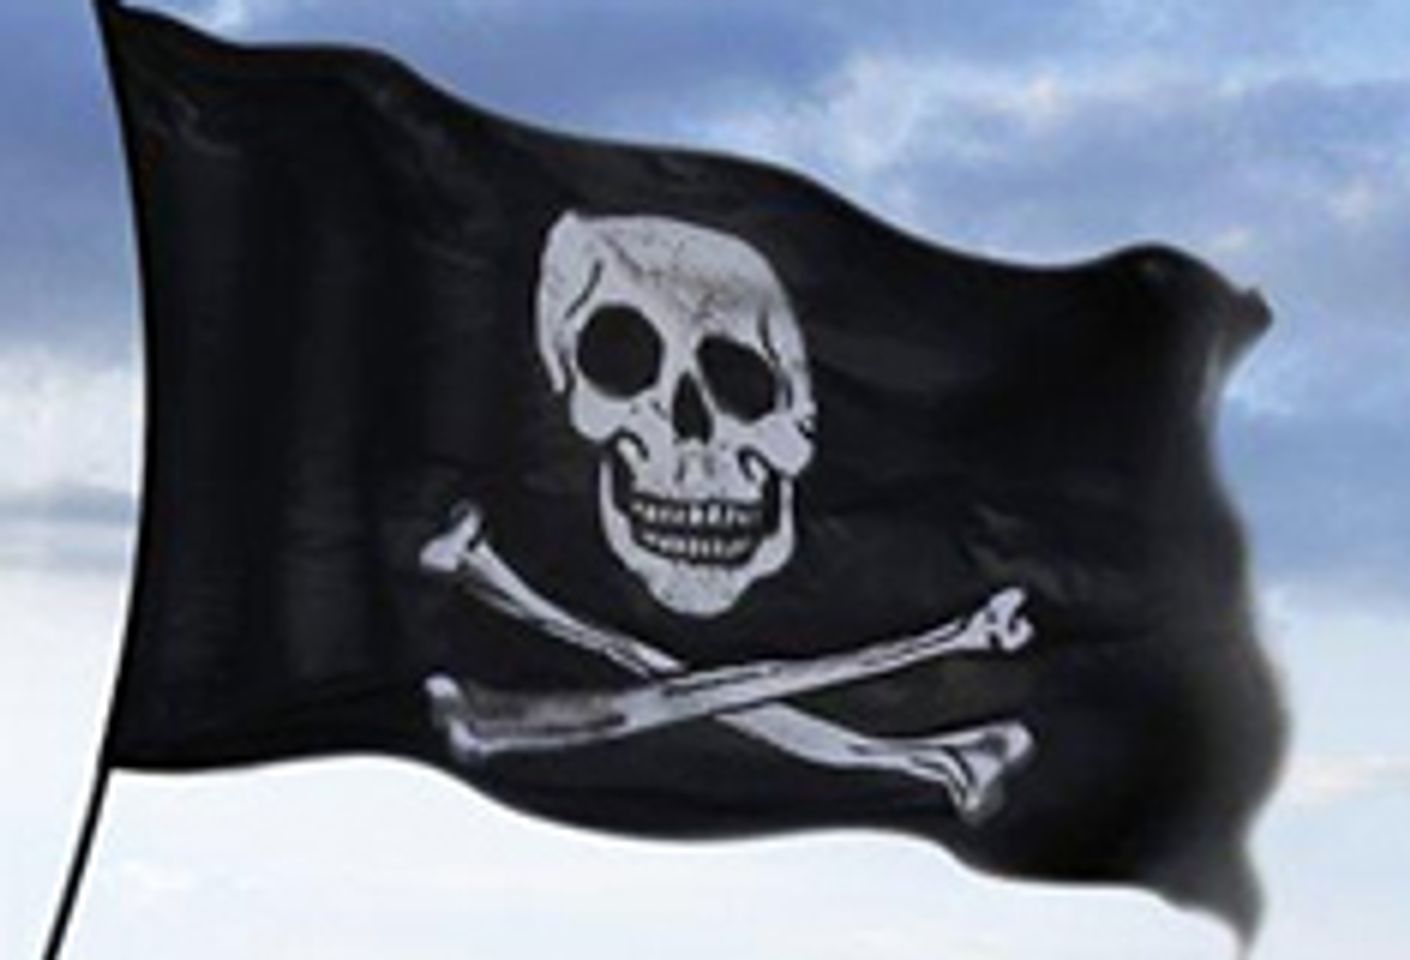 AICO Reports Progress in Aussie Piracy Case